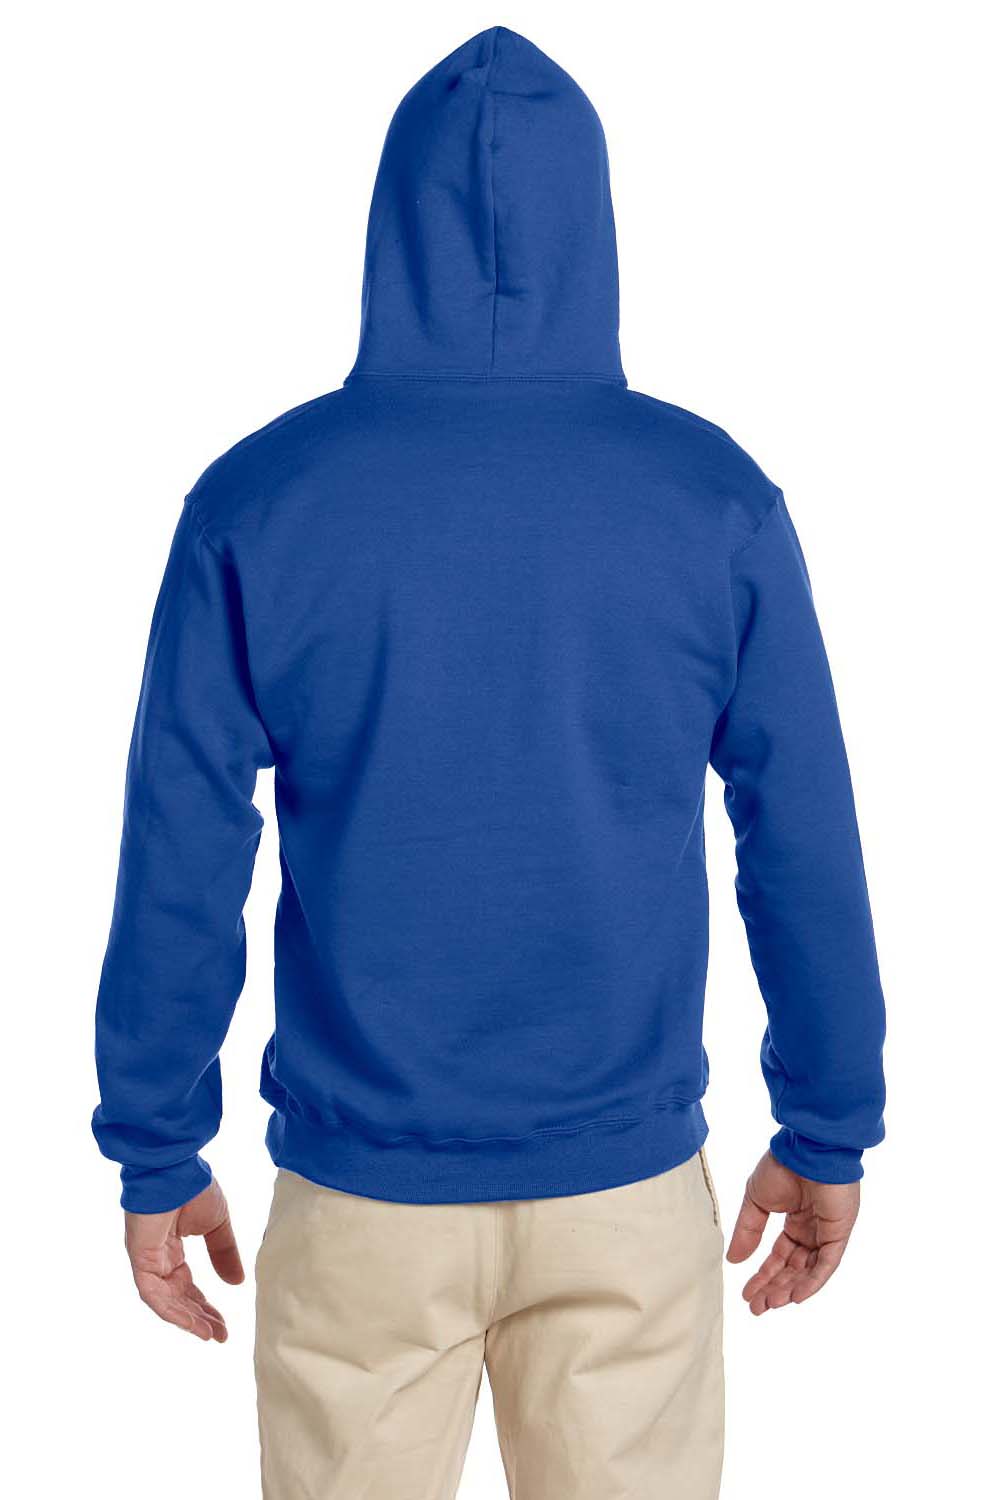 Jerzees 4997 Mens Super Sweats NuBlend Fleece Hooded Sweatshirt Hoodie Royal Blue Back